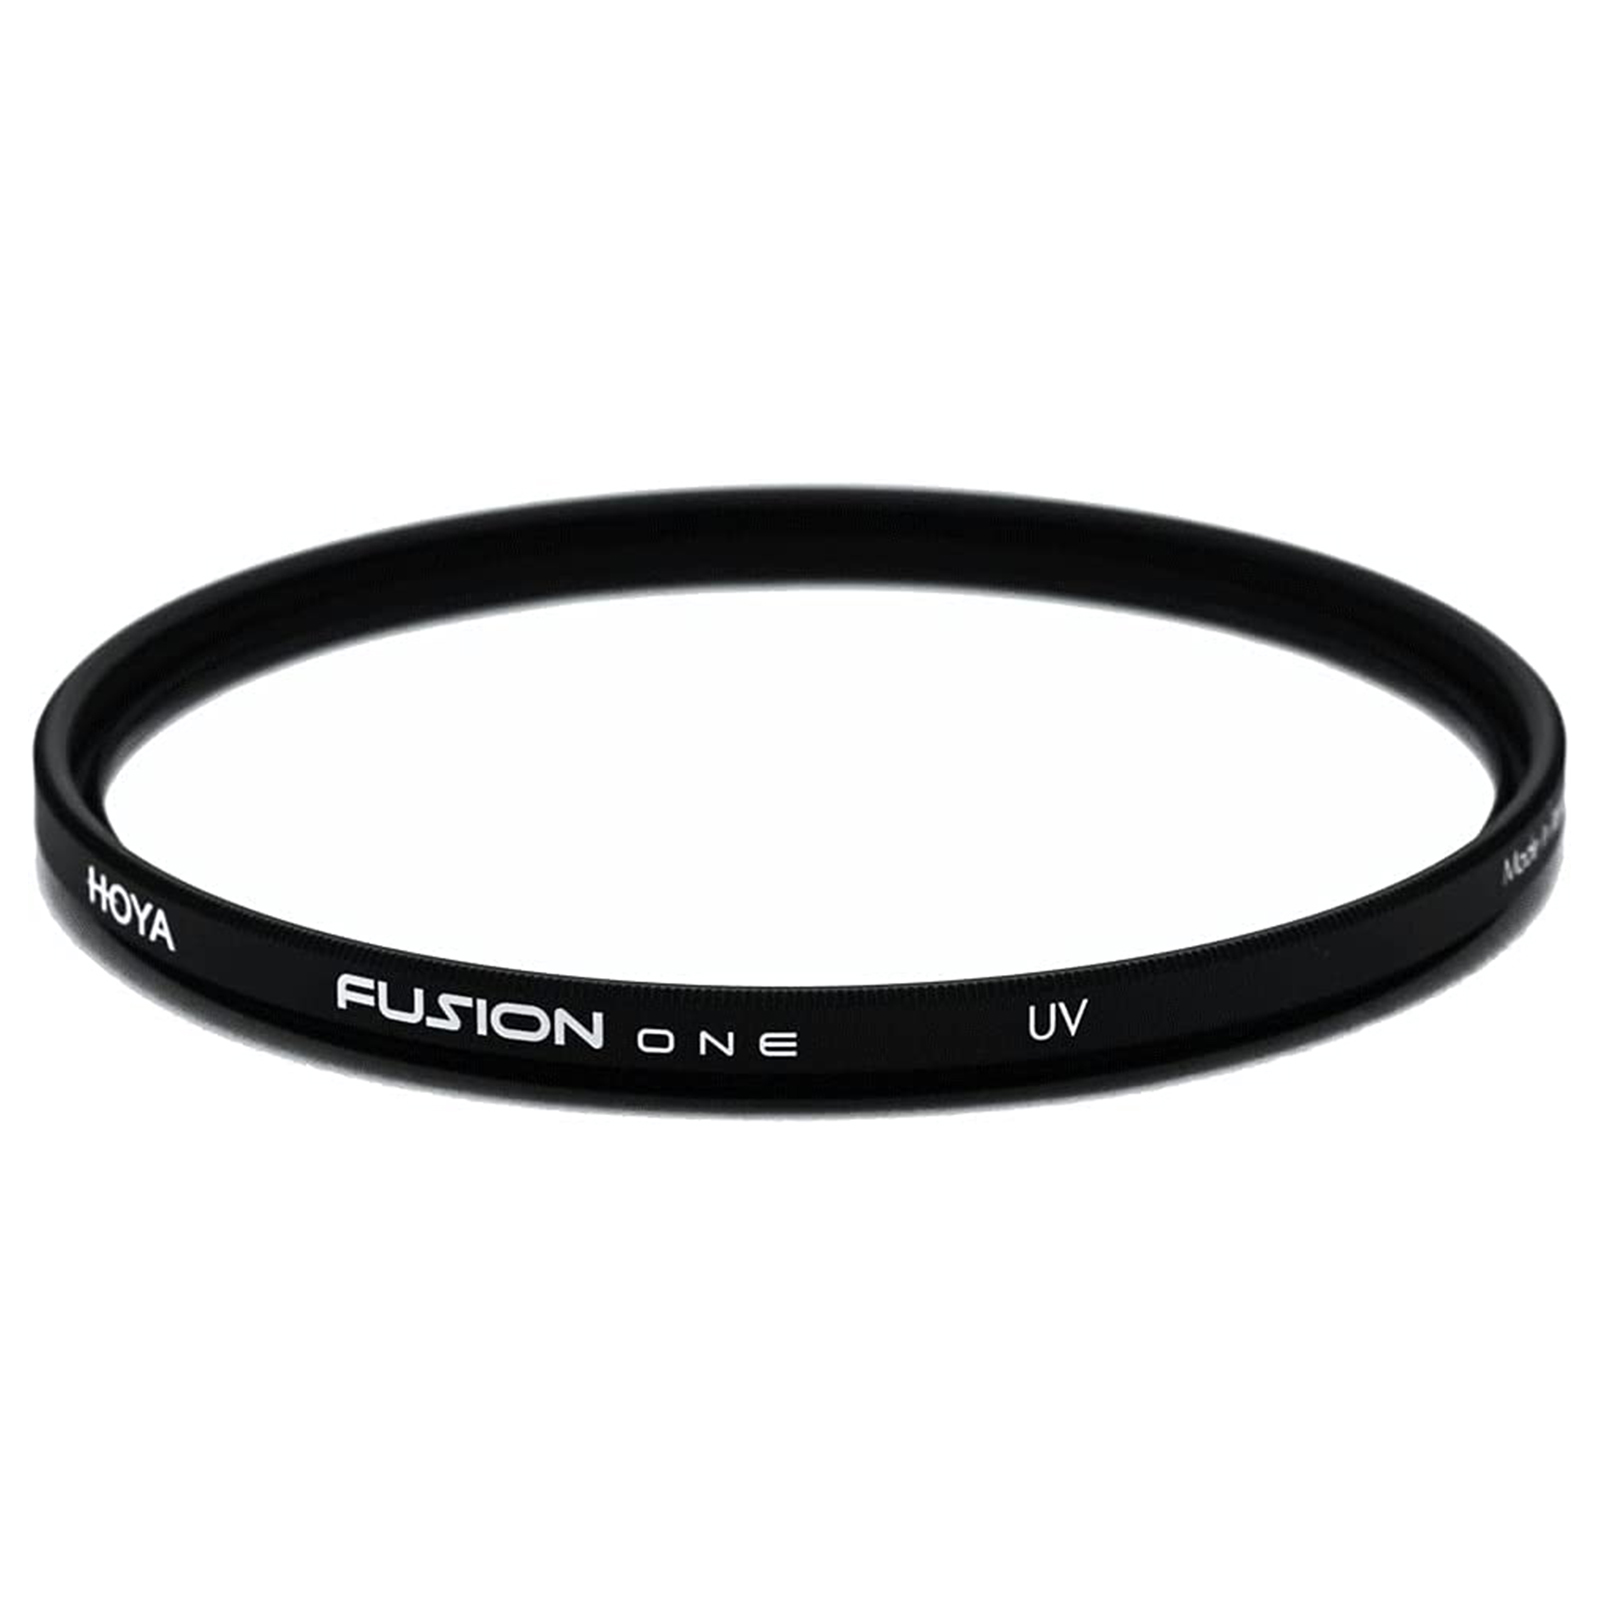 Image of Hoya 77mm Fusion AS Next UV Filter